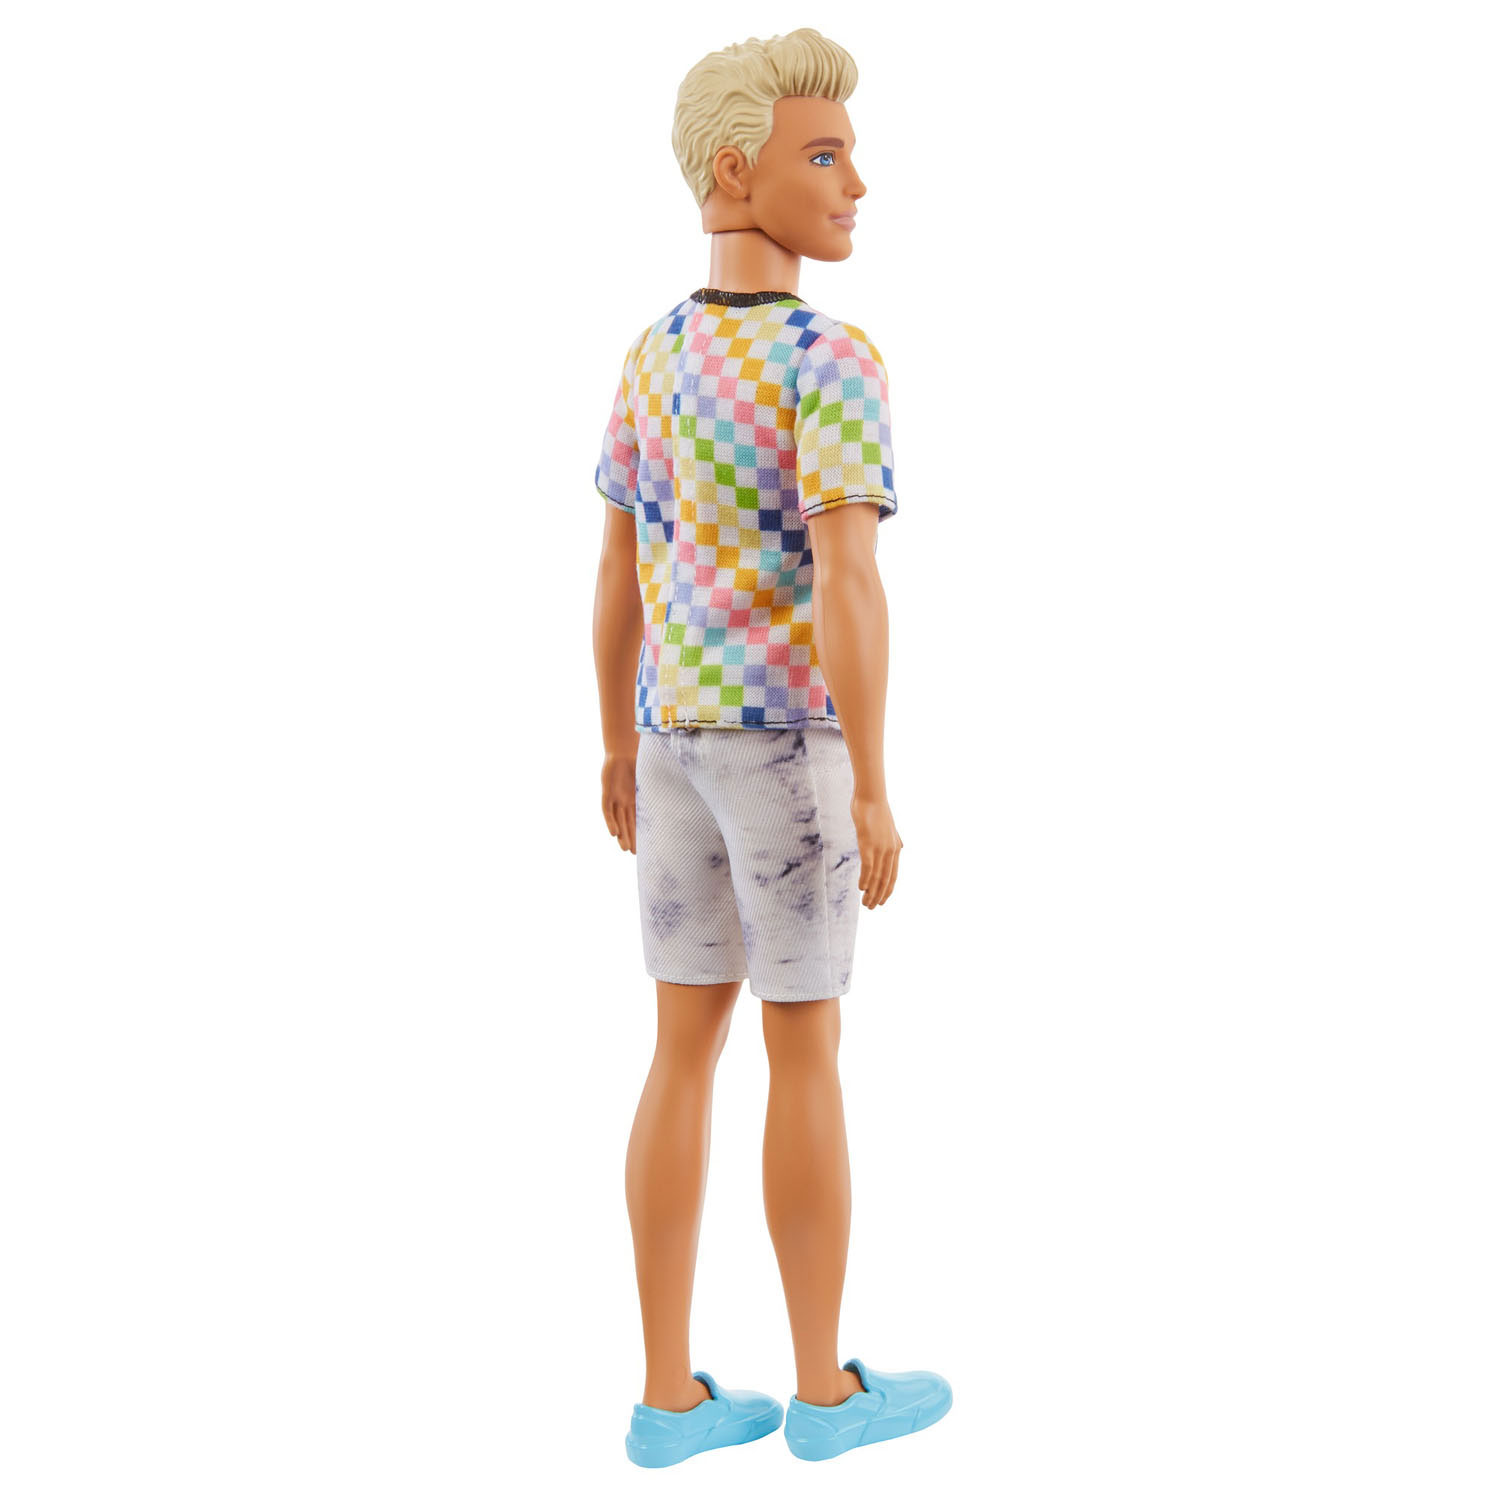 Barbie Ken Fashionista Pop - geblokt shirtje & korte broek